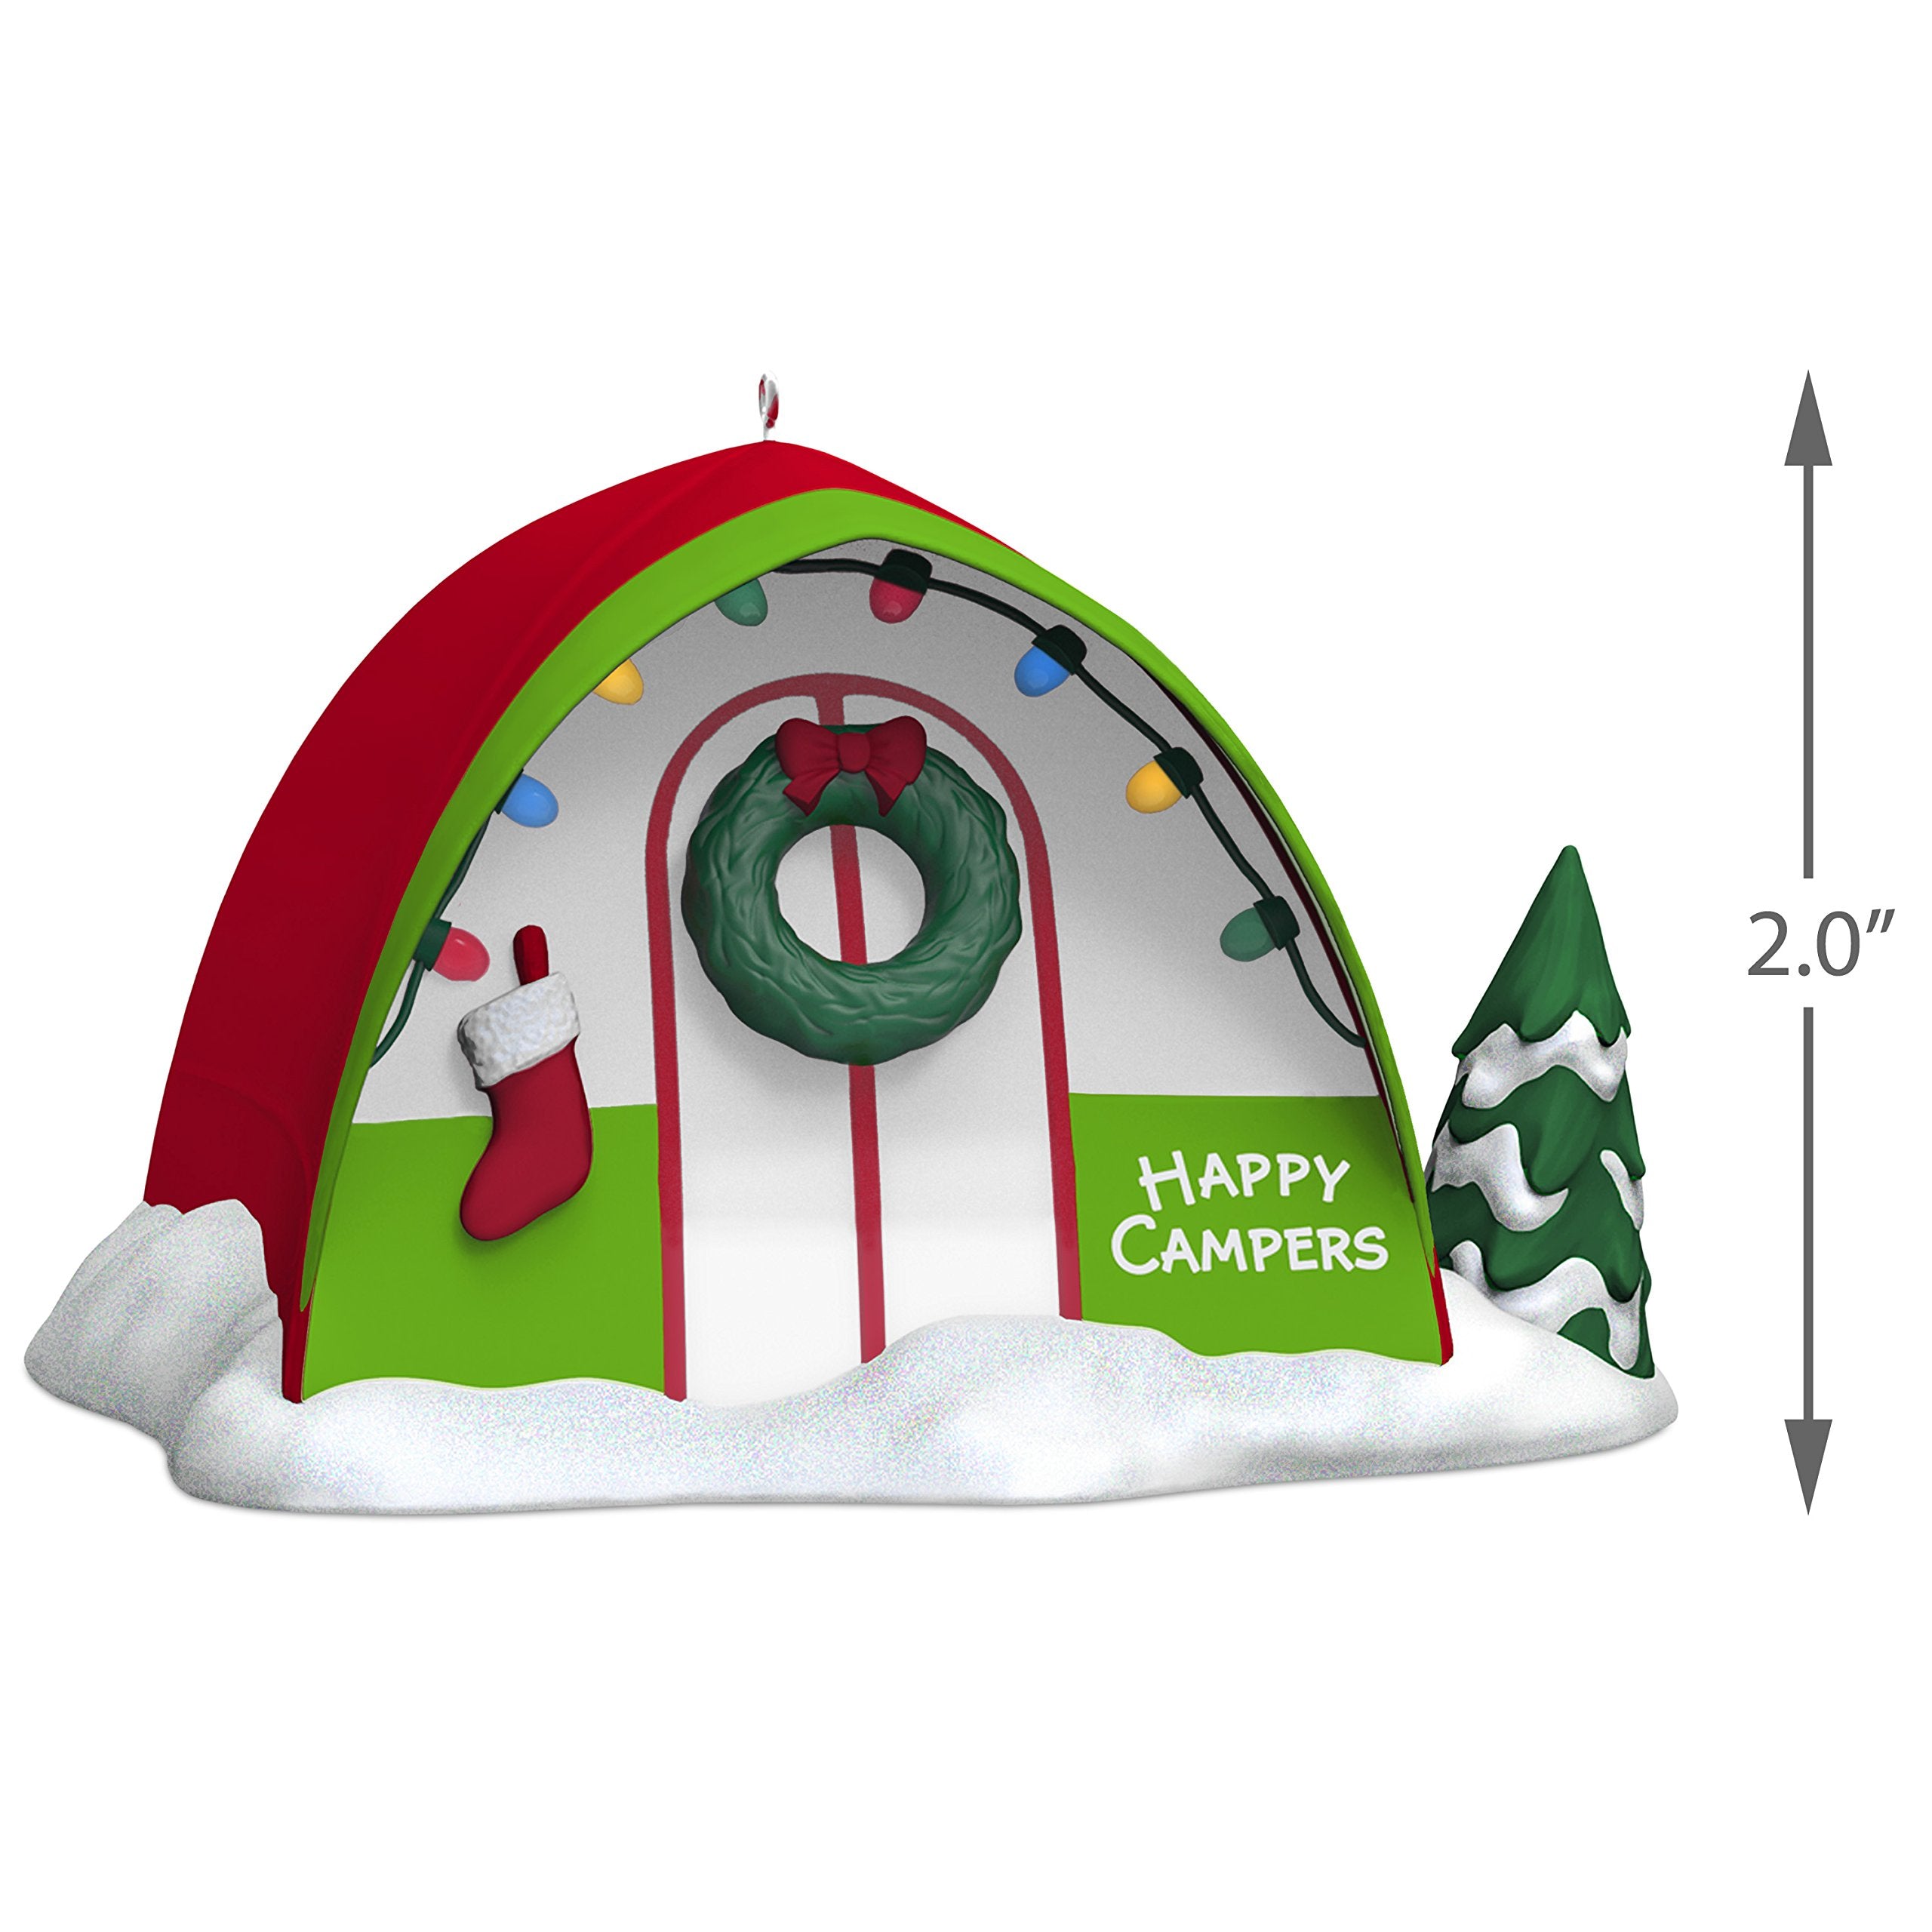 Hallmark Camping Tent Keepsake Christmas Ornaments